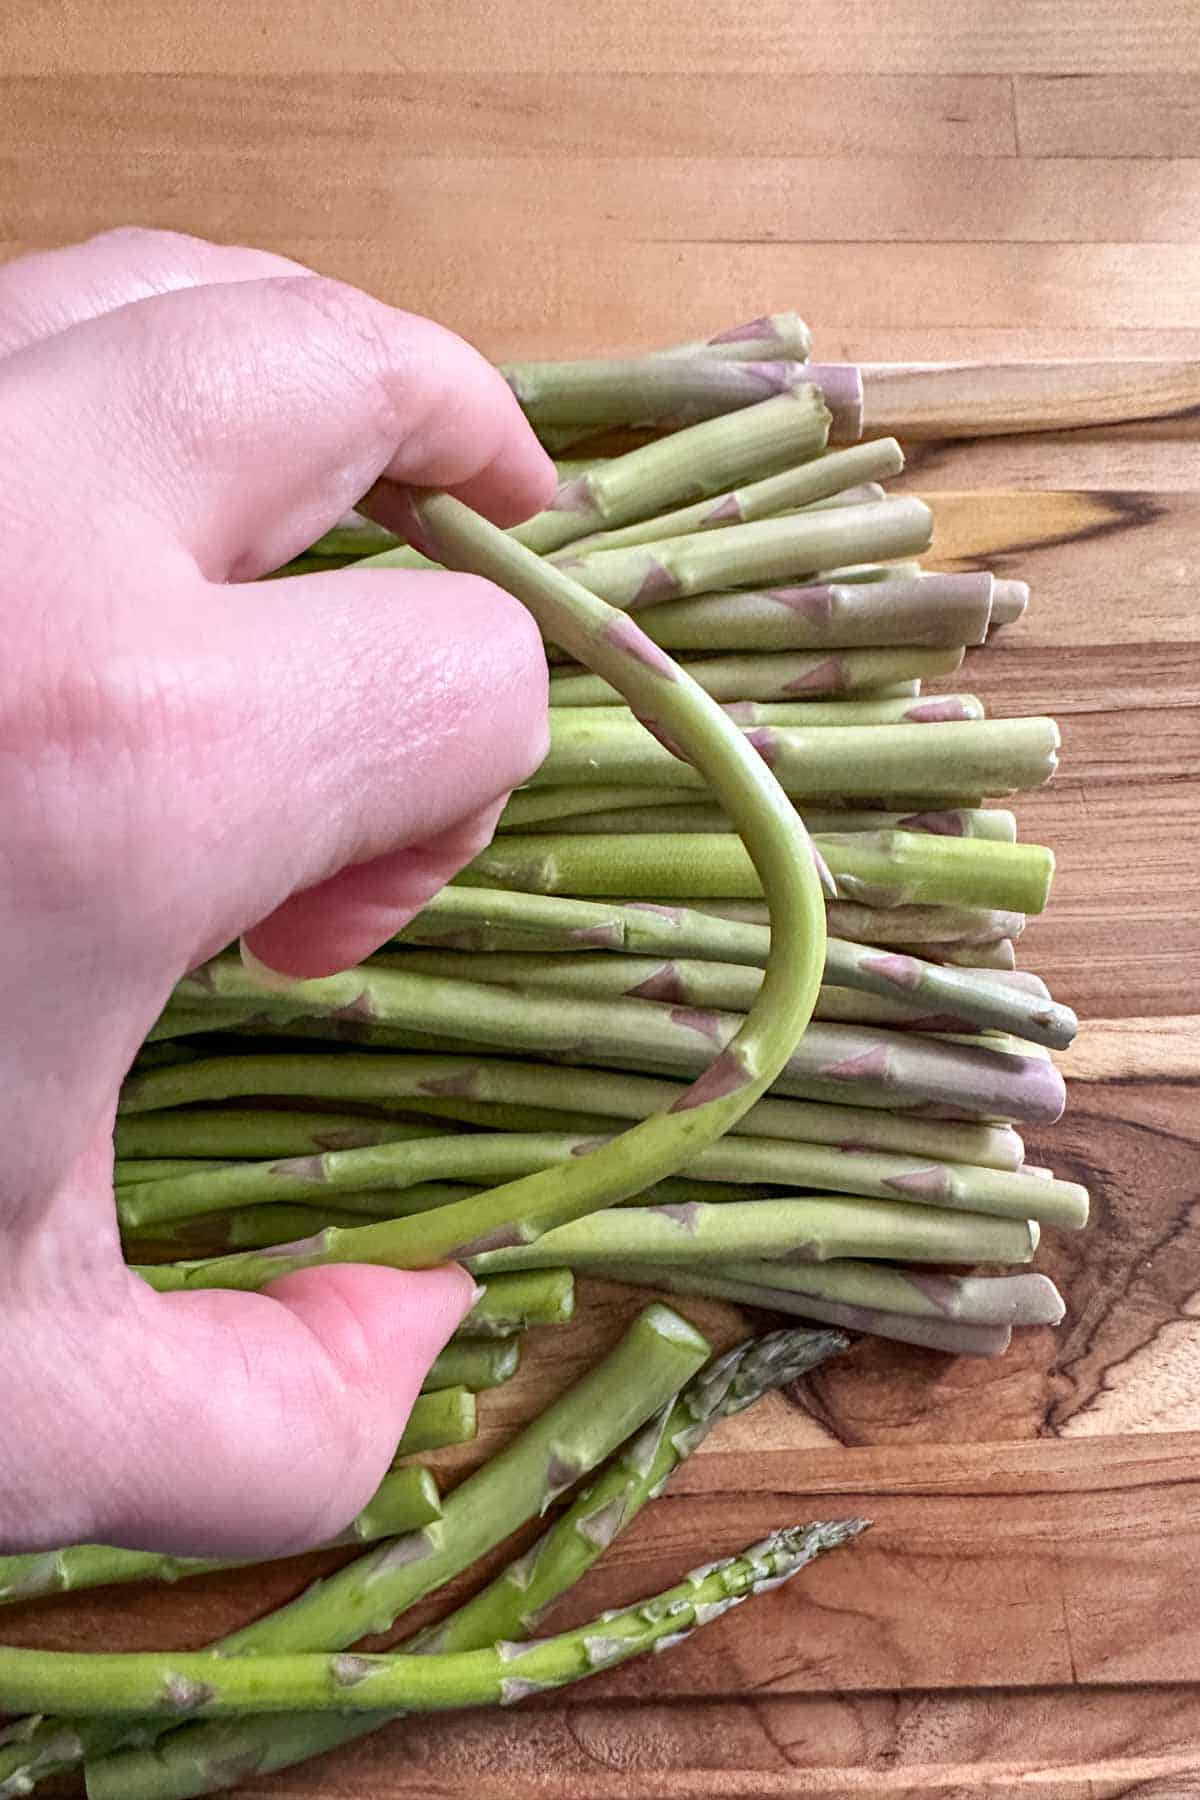 Breaking woody ends off asparagus.